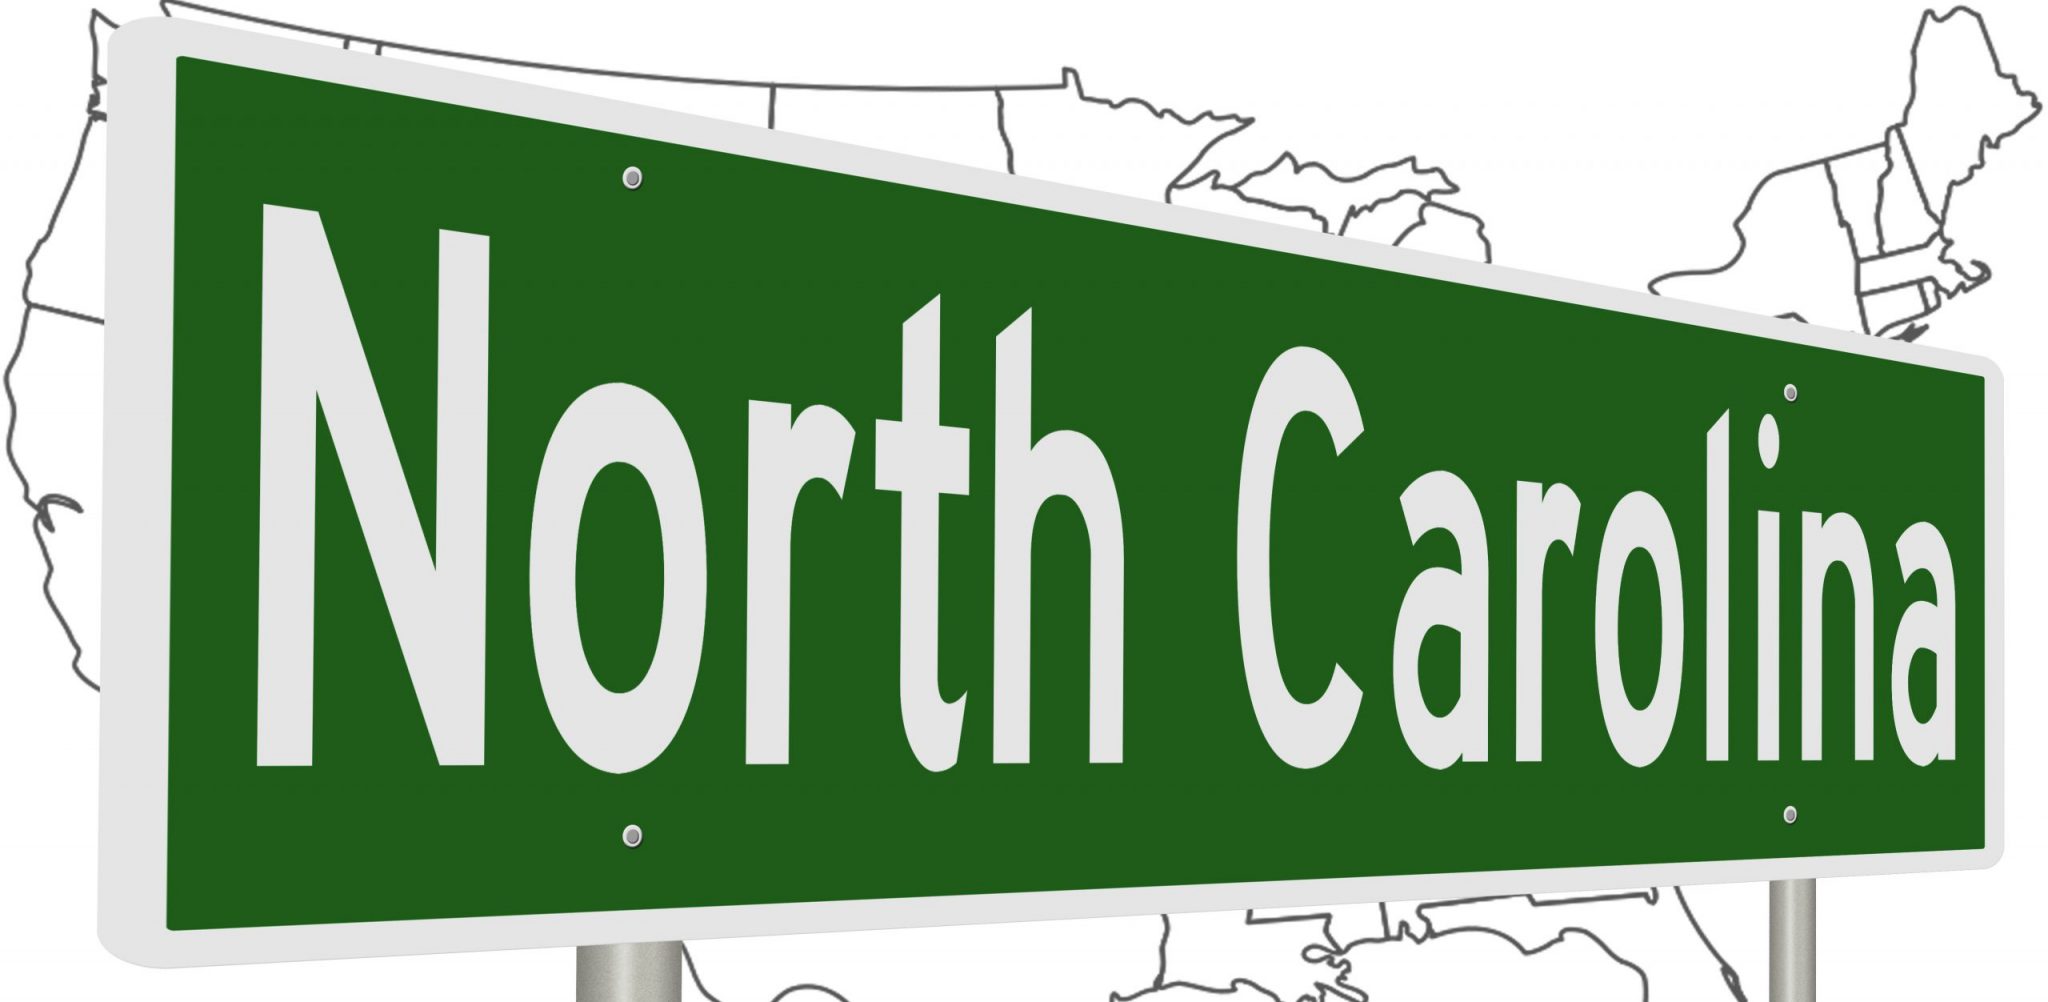 north carolina sign